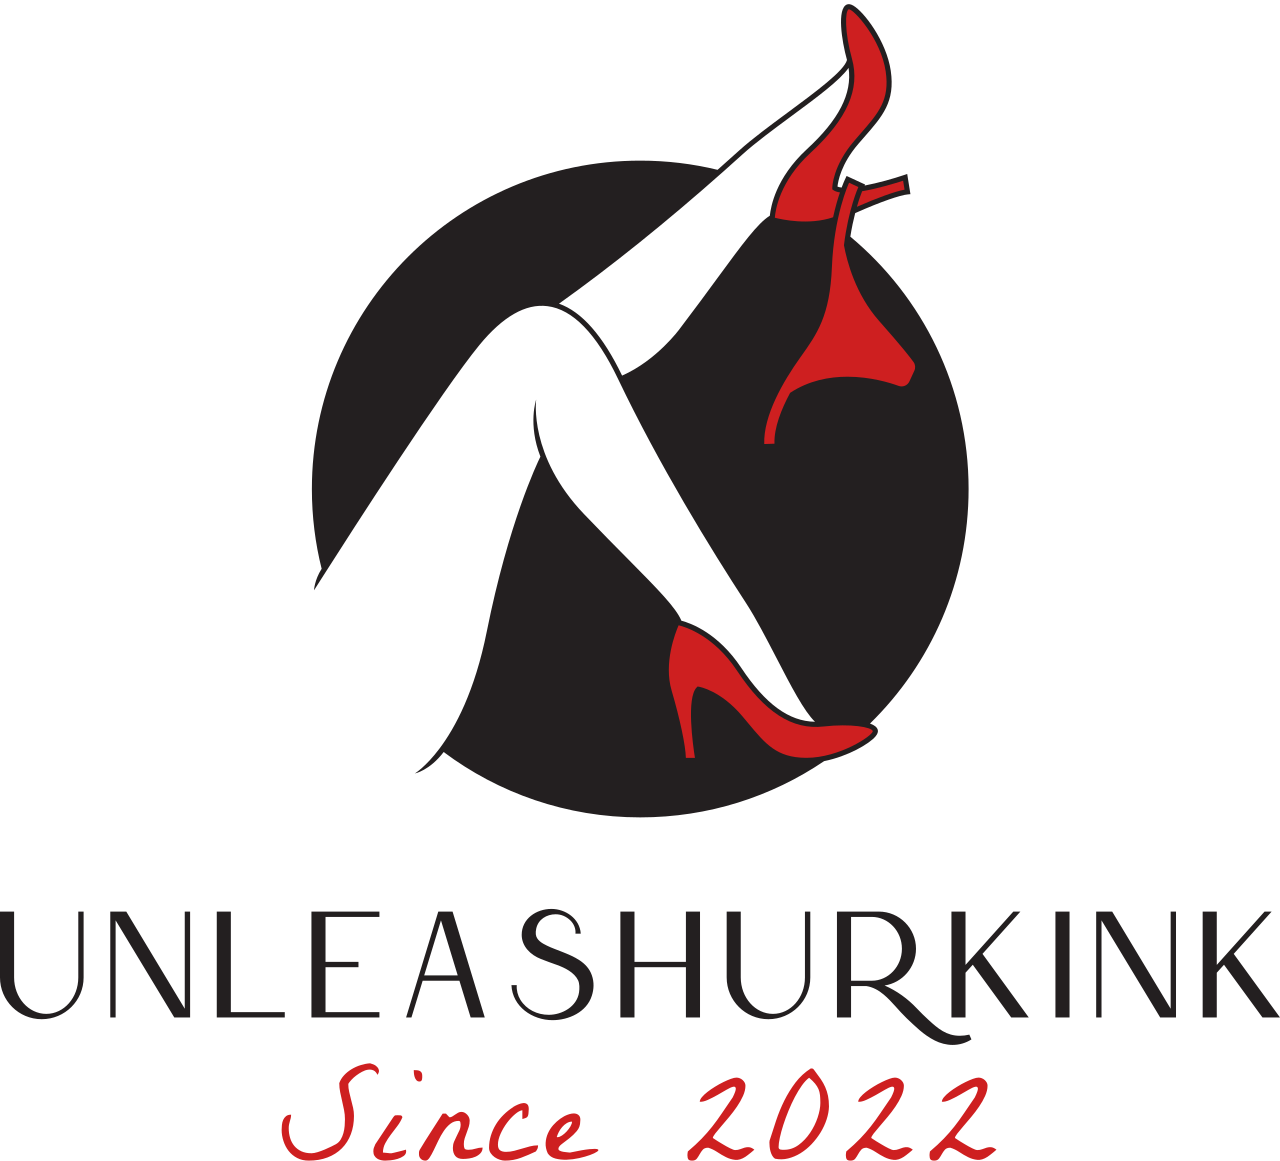 Unleashurkink's web page